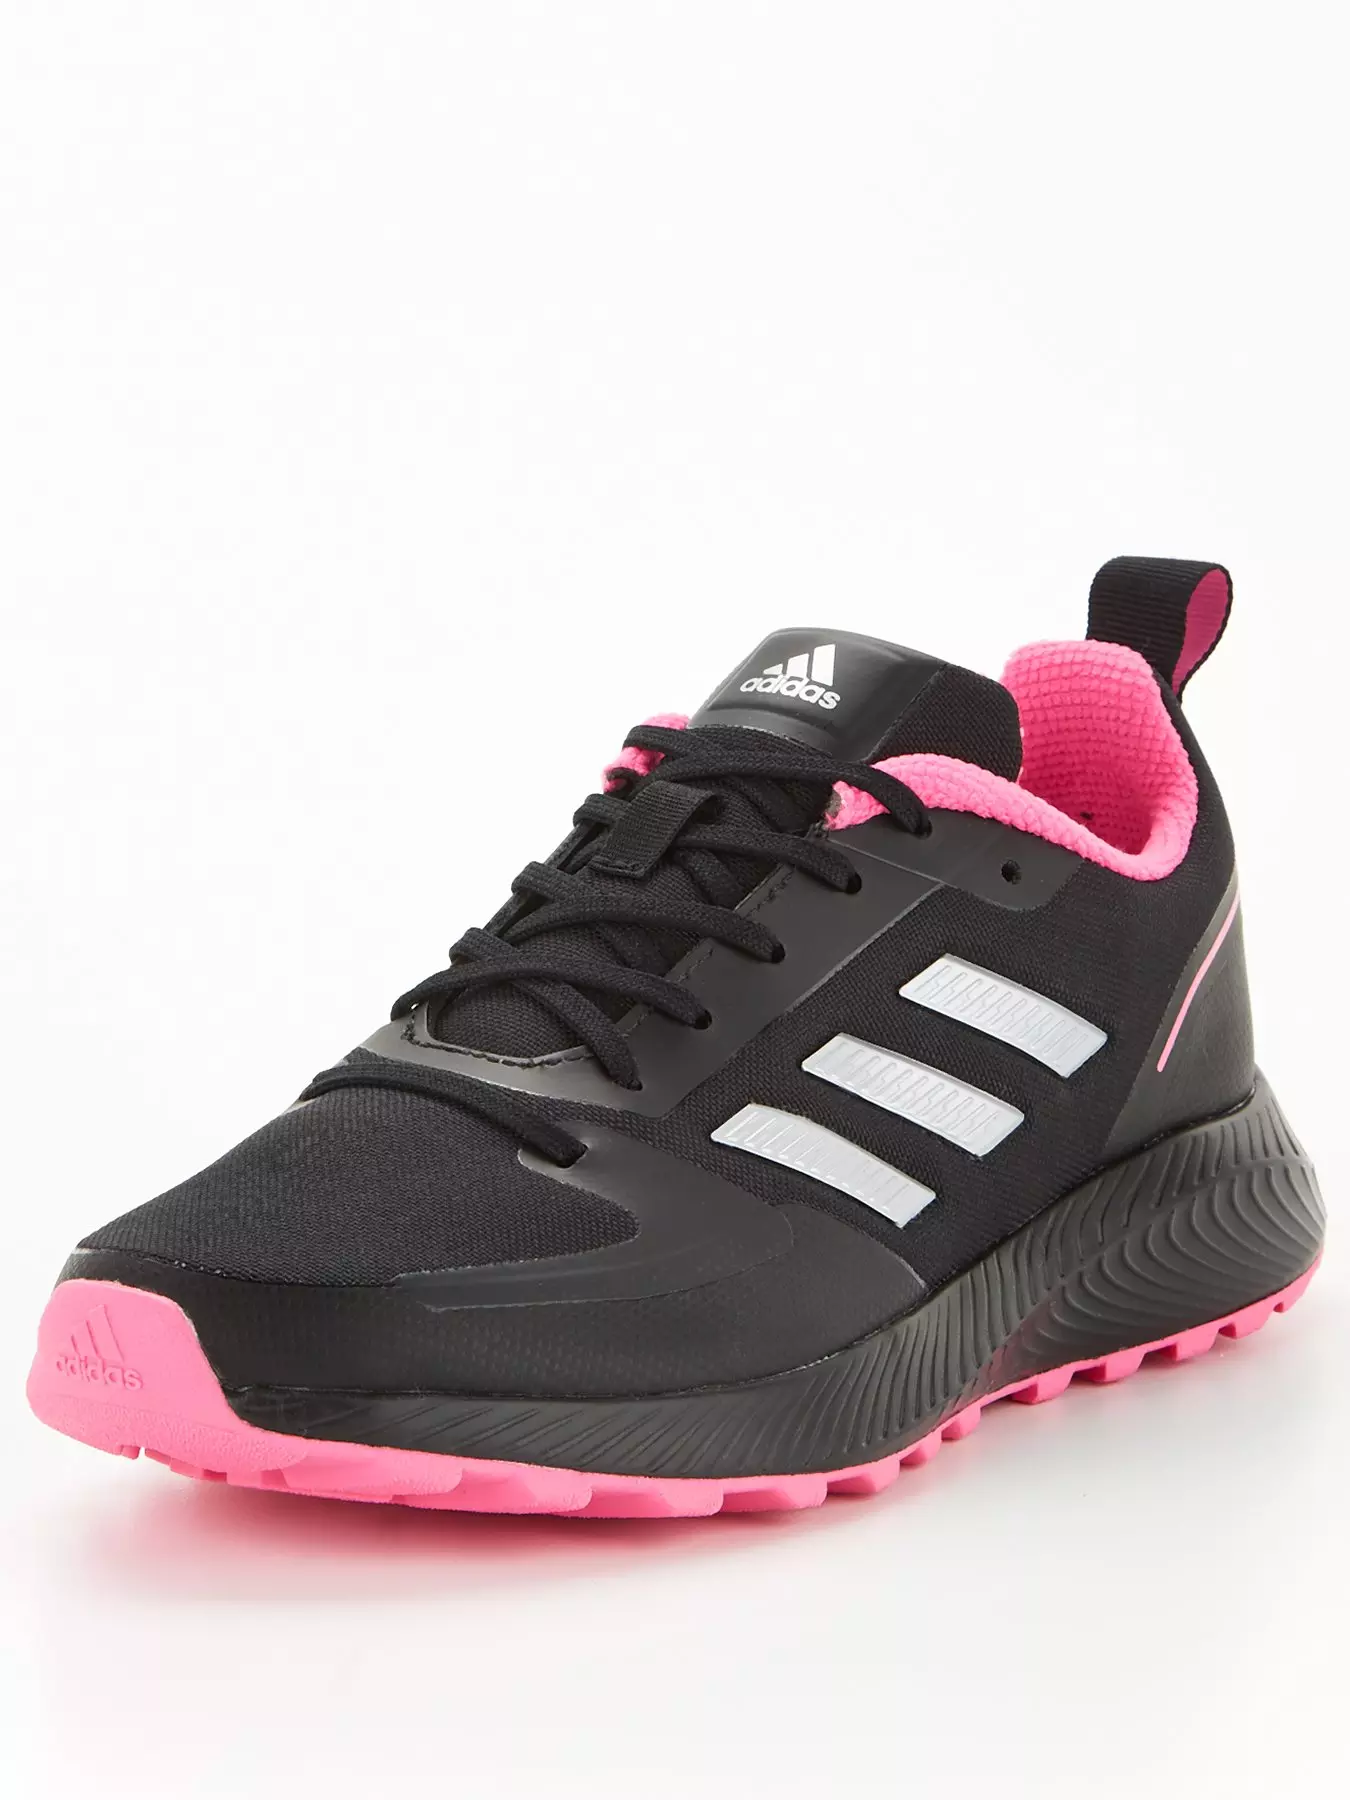 Congelar Cuando Terapia Black | Running | Adidas | Trainers | Women | www.very.co.uk